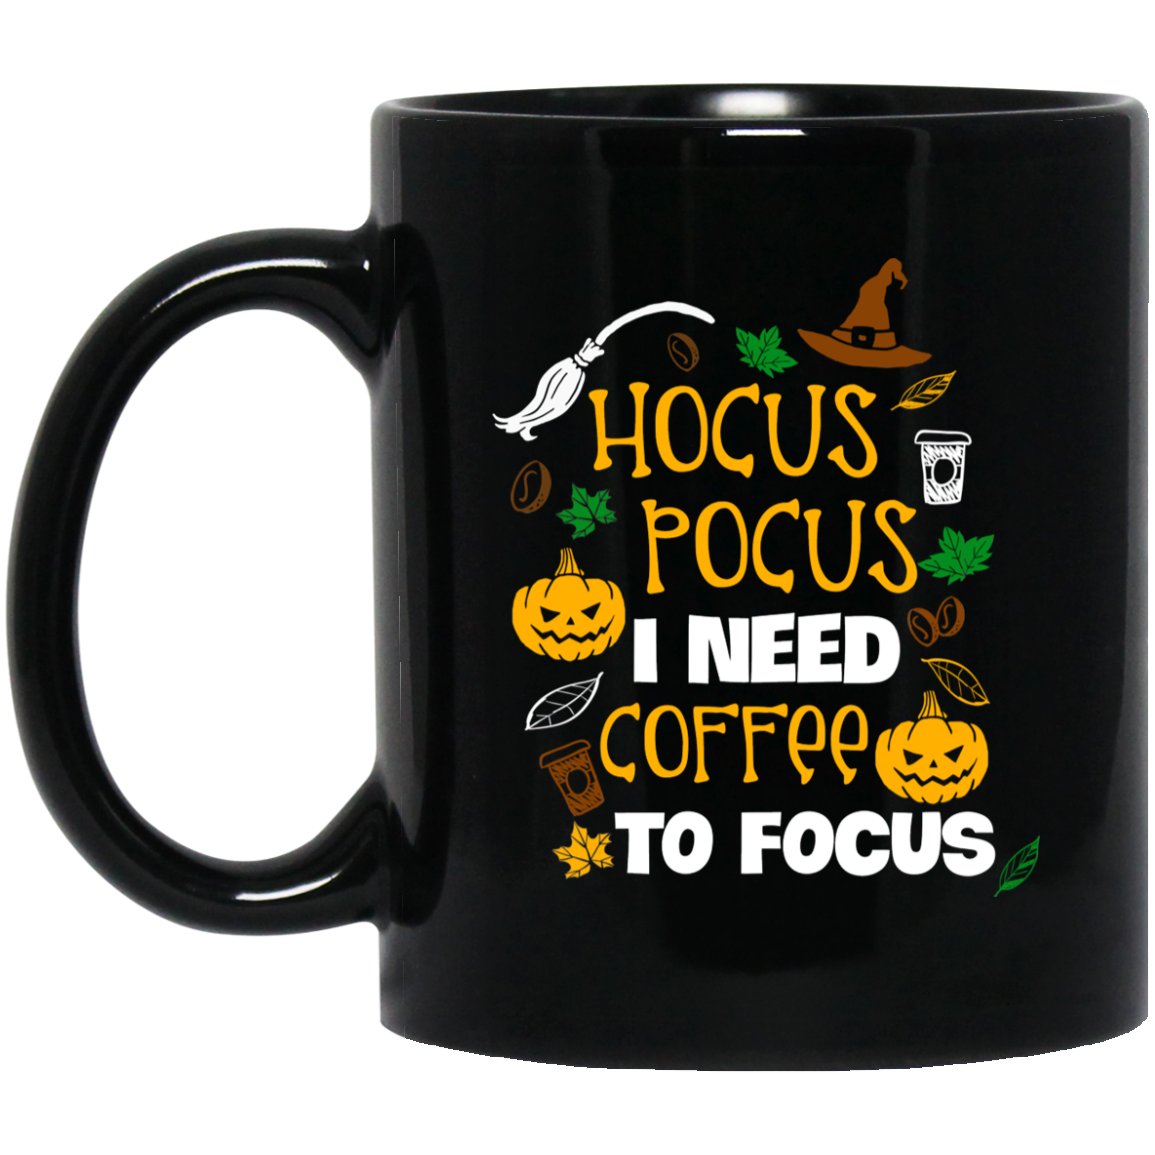 Hocus Pocus I Need Coffee to Focus mug